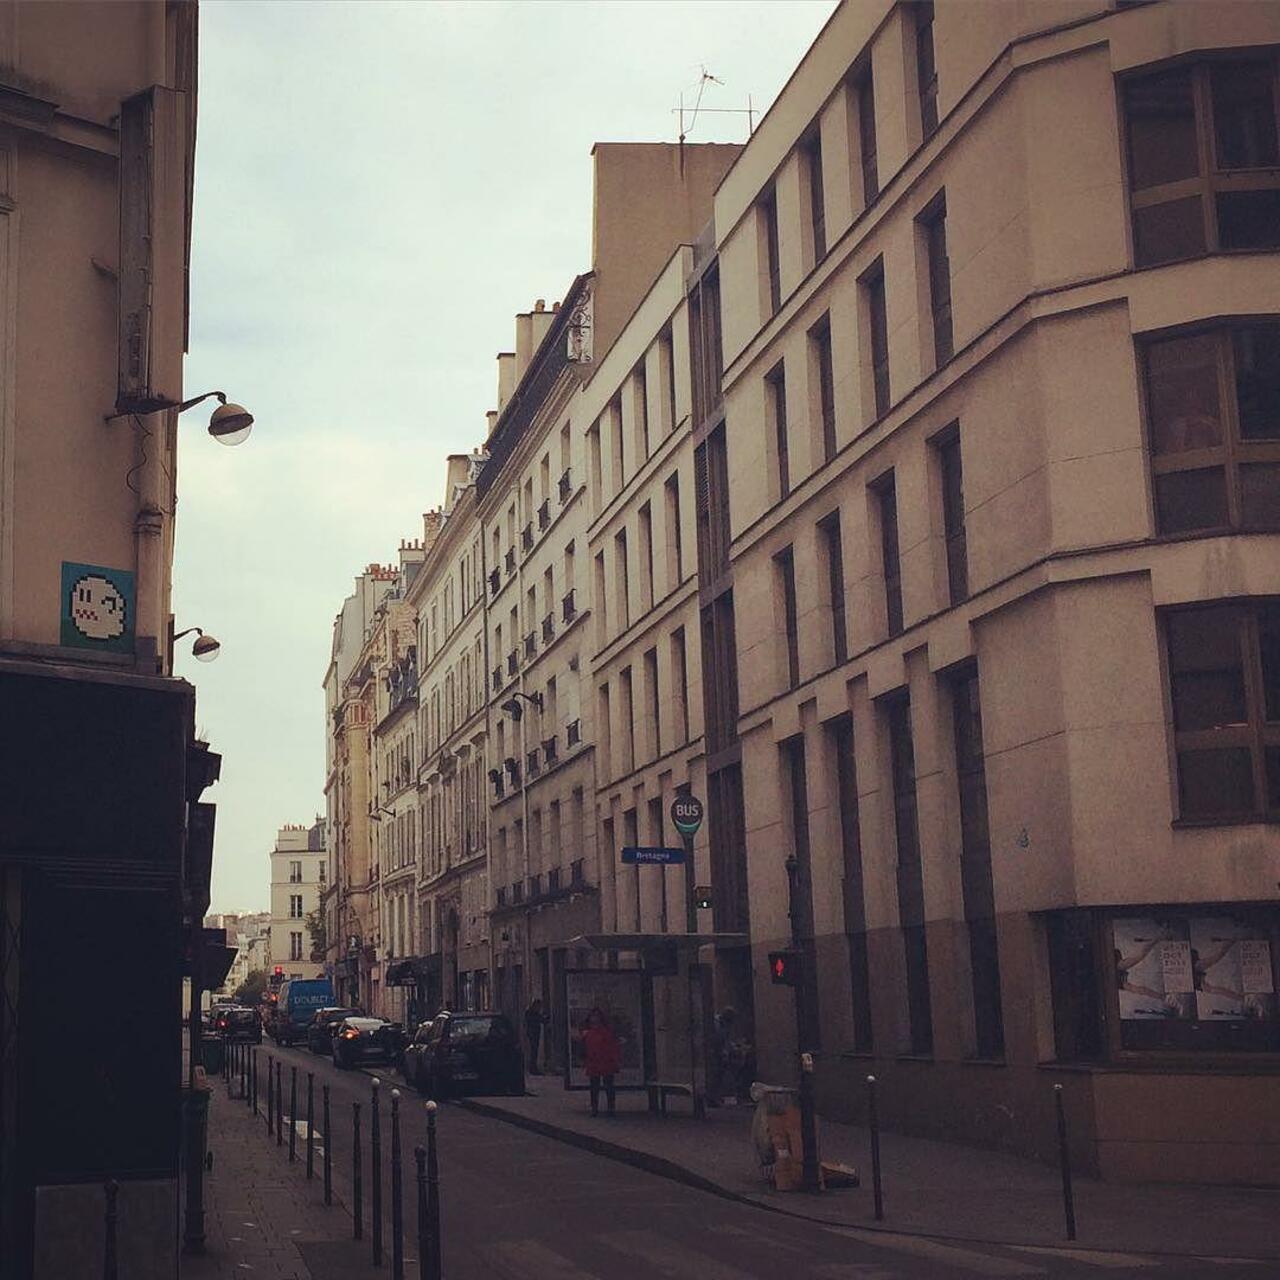 #Paris #graffiti photo by @julienvermeulen http://ift.tt/1LMnNOz #StreetArt http://t.co/IUl9GTL0dB